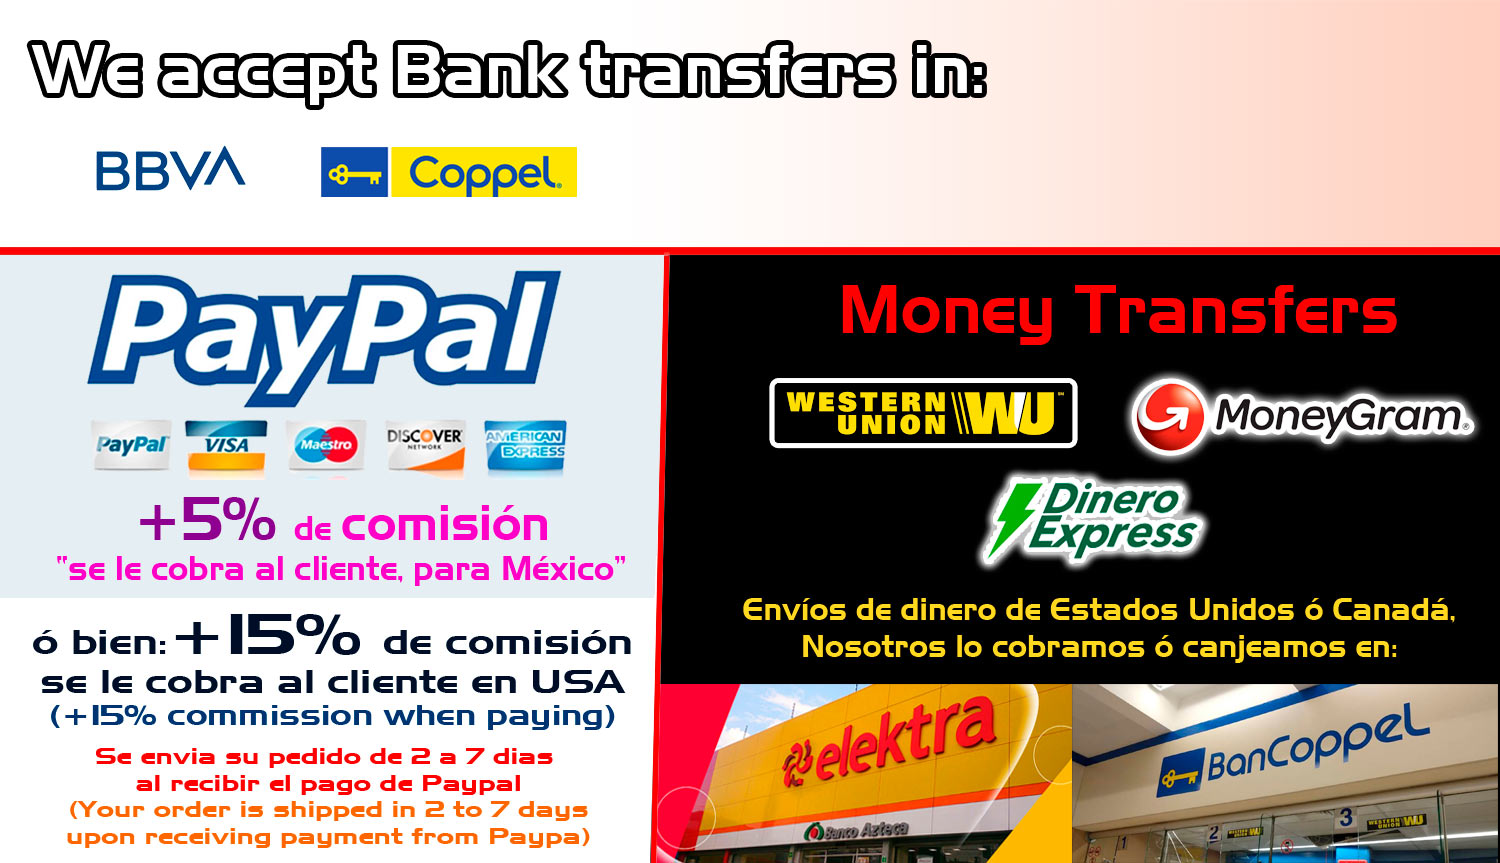 Transfers or money transfers